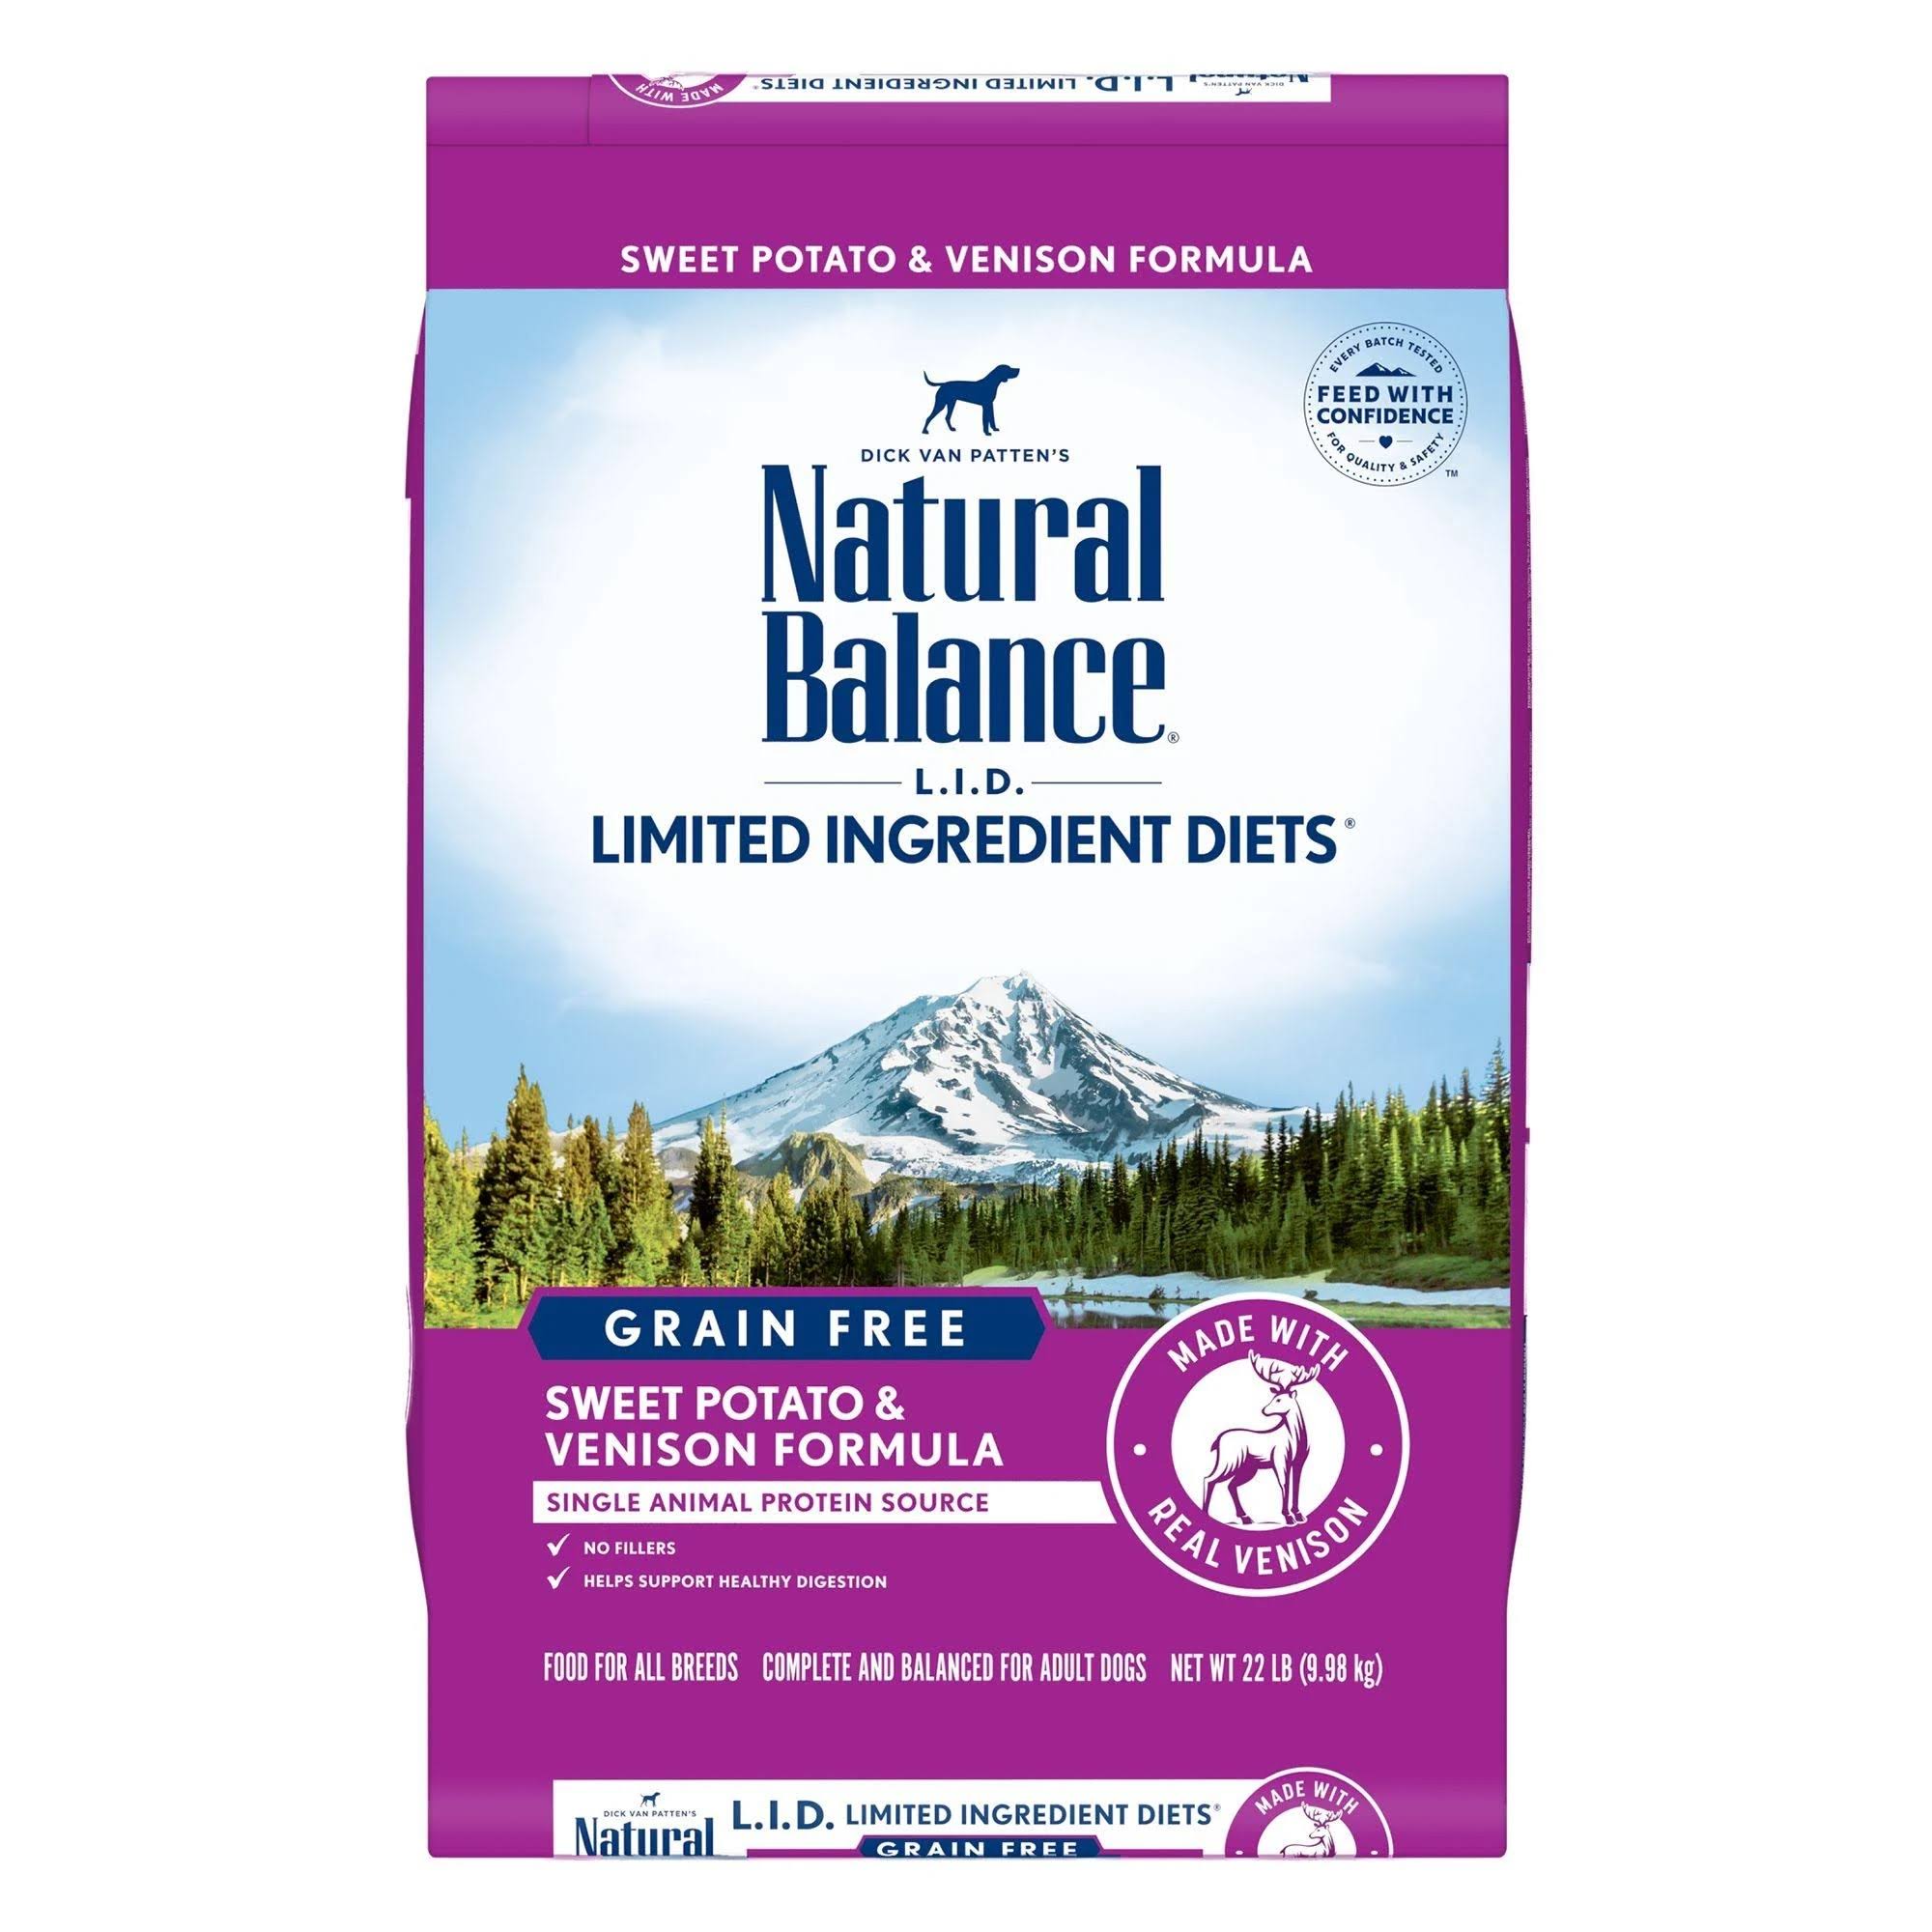 Natural Balance L.I.D. Limited Ingredient Diets Sweet Potato & Venison Formula Dry Dog Food, 22 lbs.